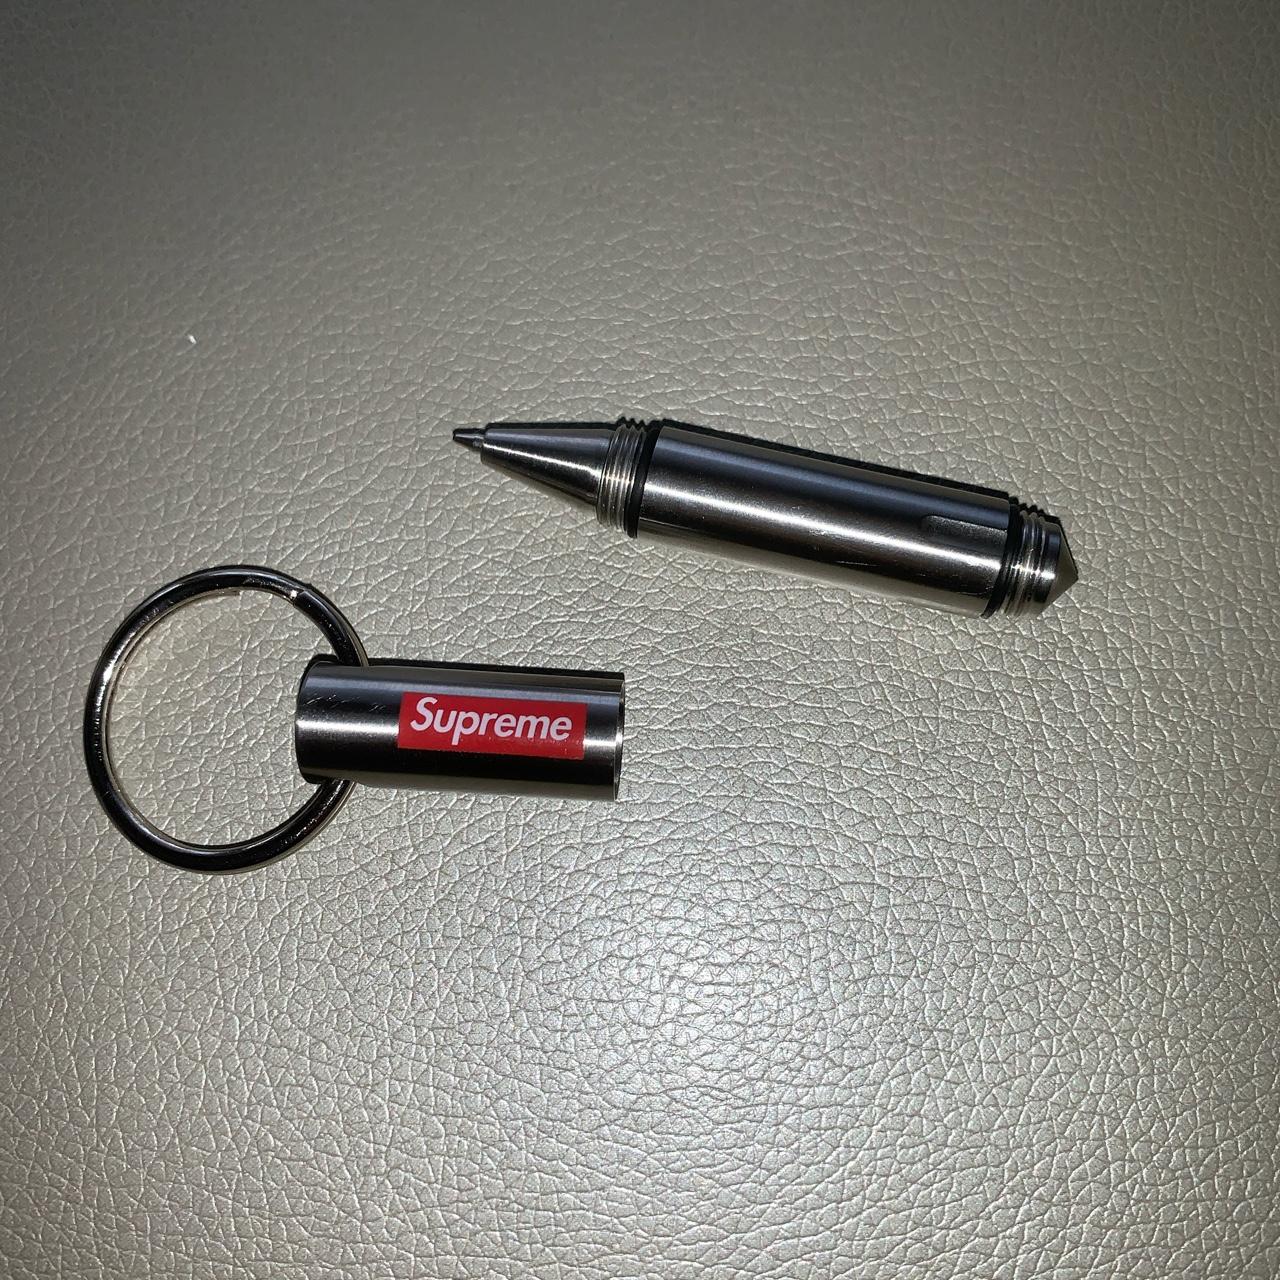 Supreme SS16 Keychain Pen Stainless Steel, pen ink - Depop